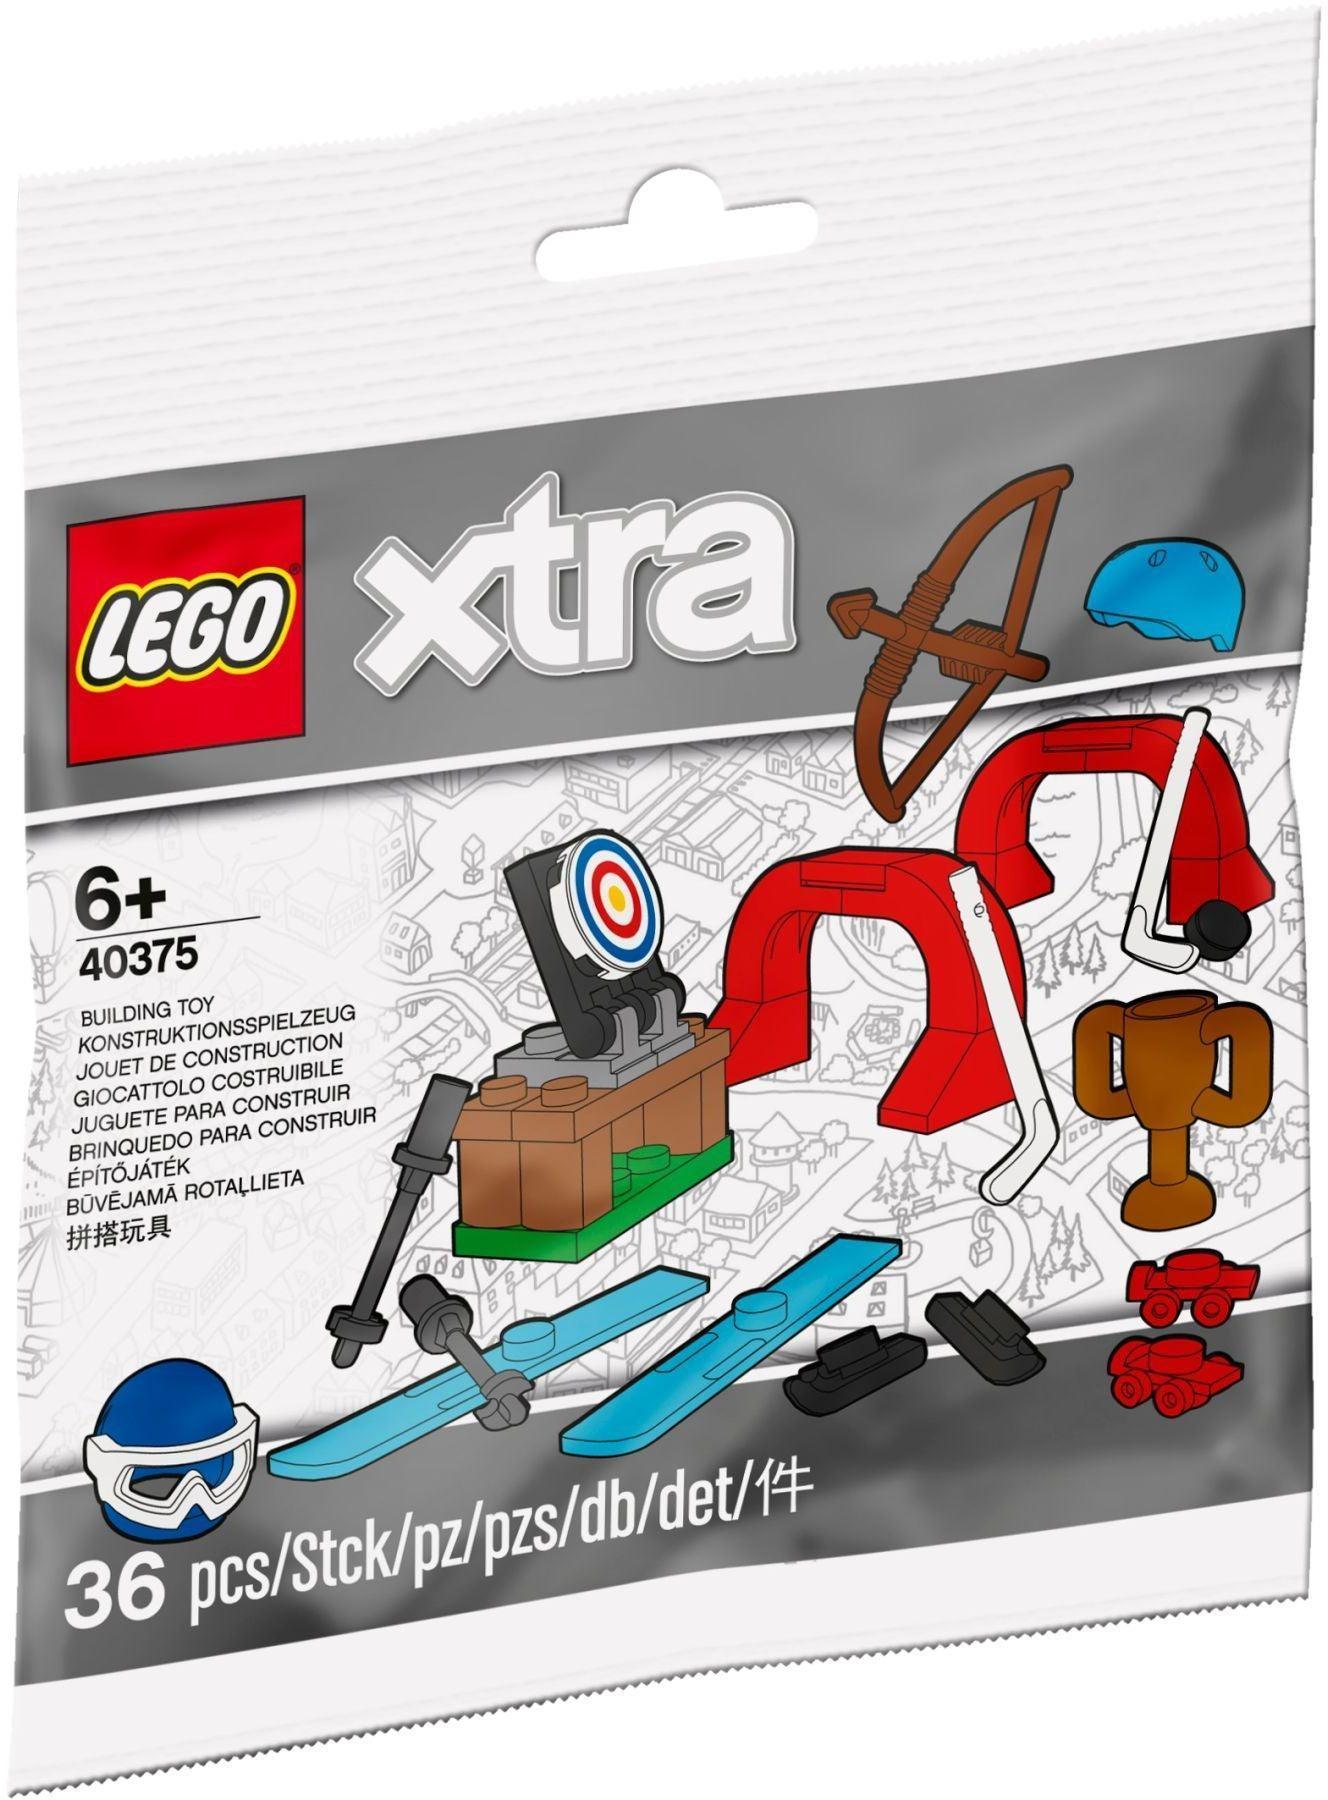 LEGO Sports Accessories 40375 Xtra LEGO XTRA @ 2TTOYS LEGO €. 3.99